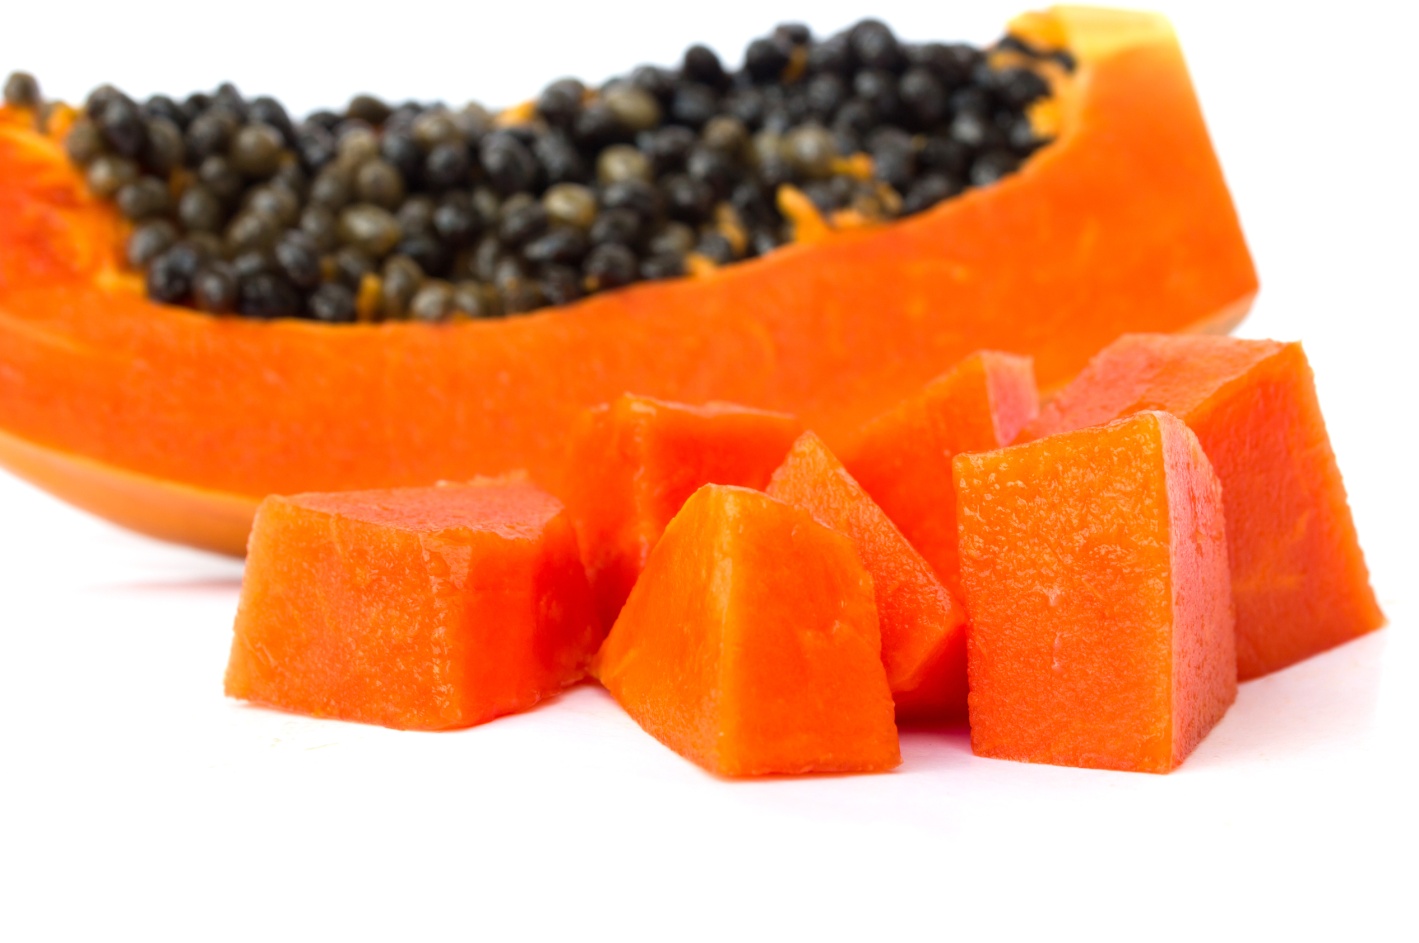 NUTRIKALP: Health Benefits of Papaya